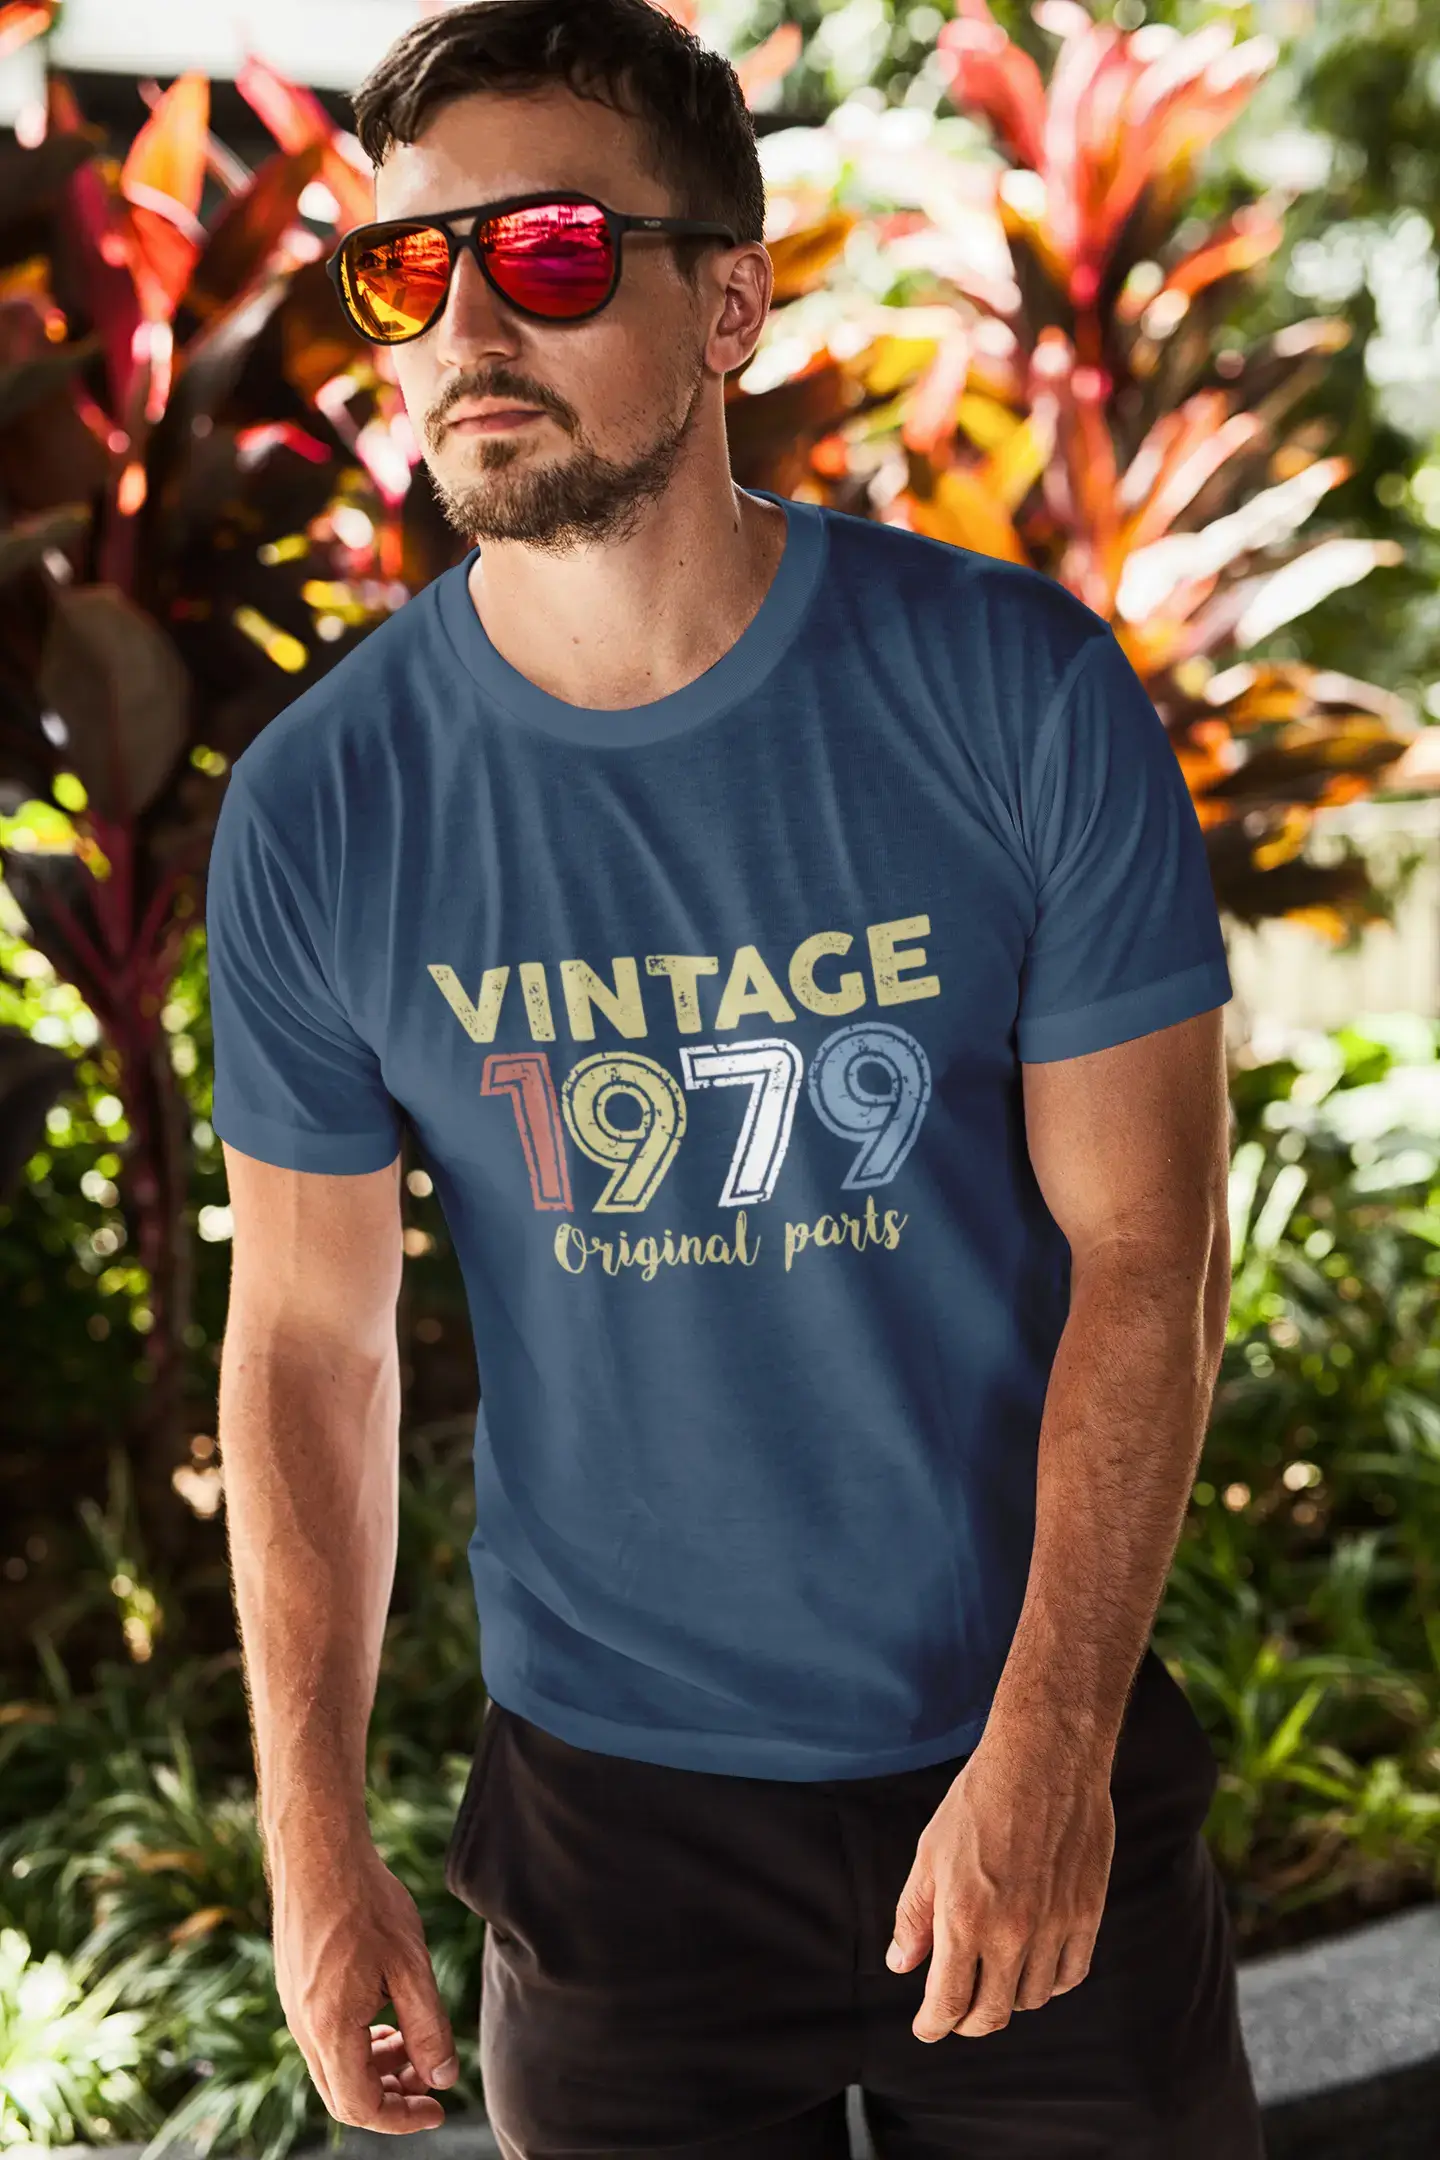 ULTRABASIC - Graphic Printed Men's Vintage 1979 T-Shirt Denim